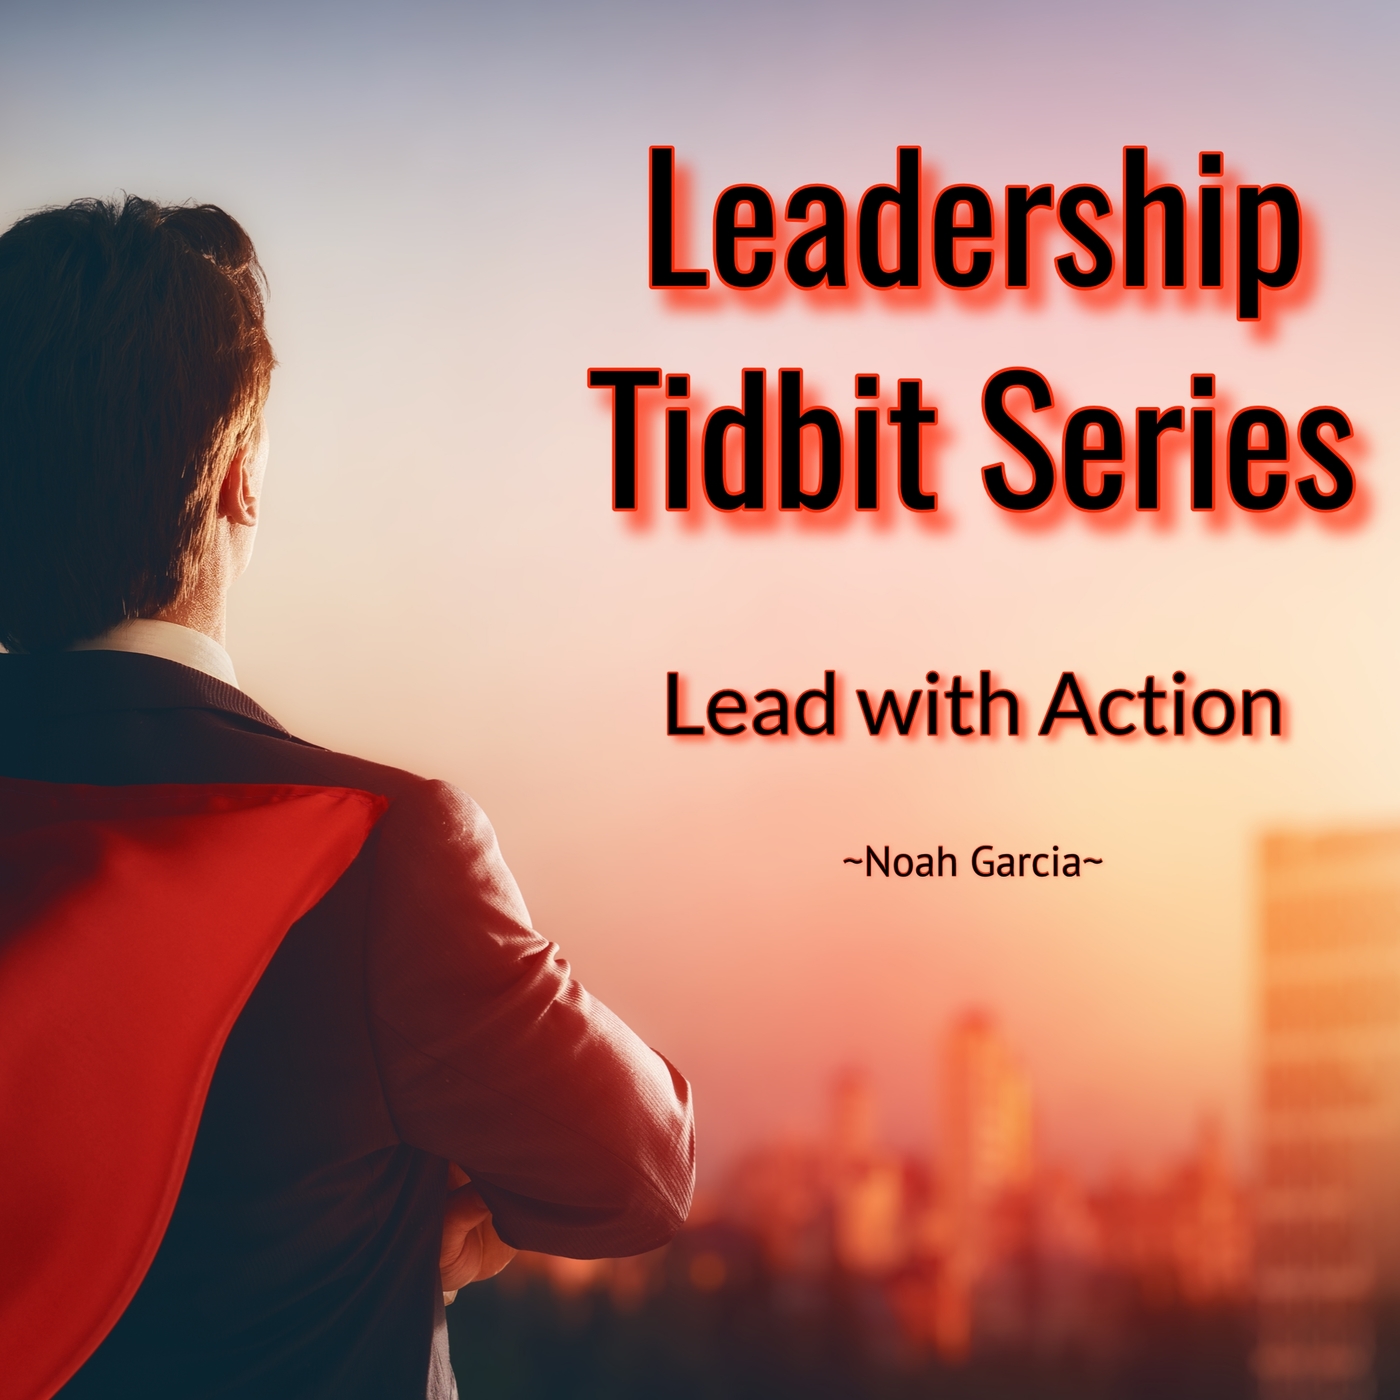 Leadership Tidbit Series: Lead with Action